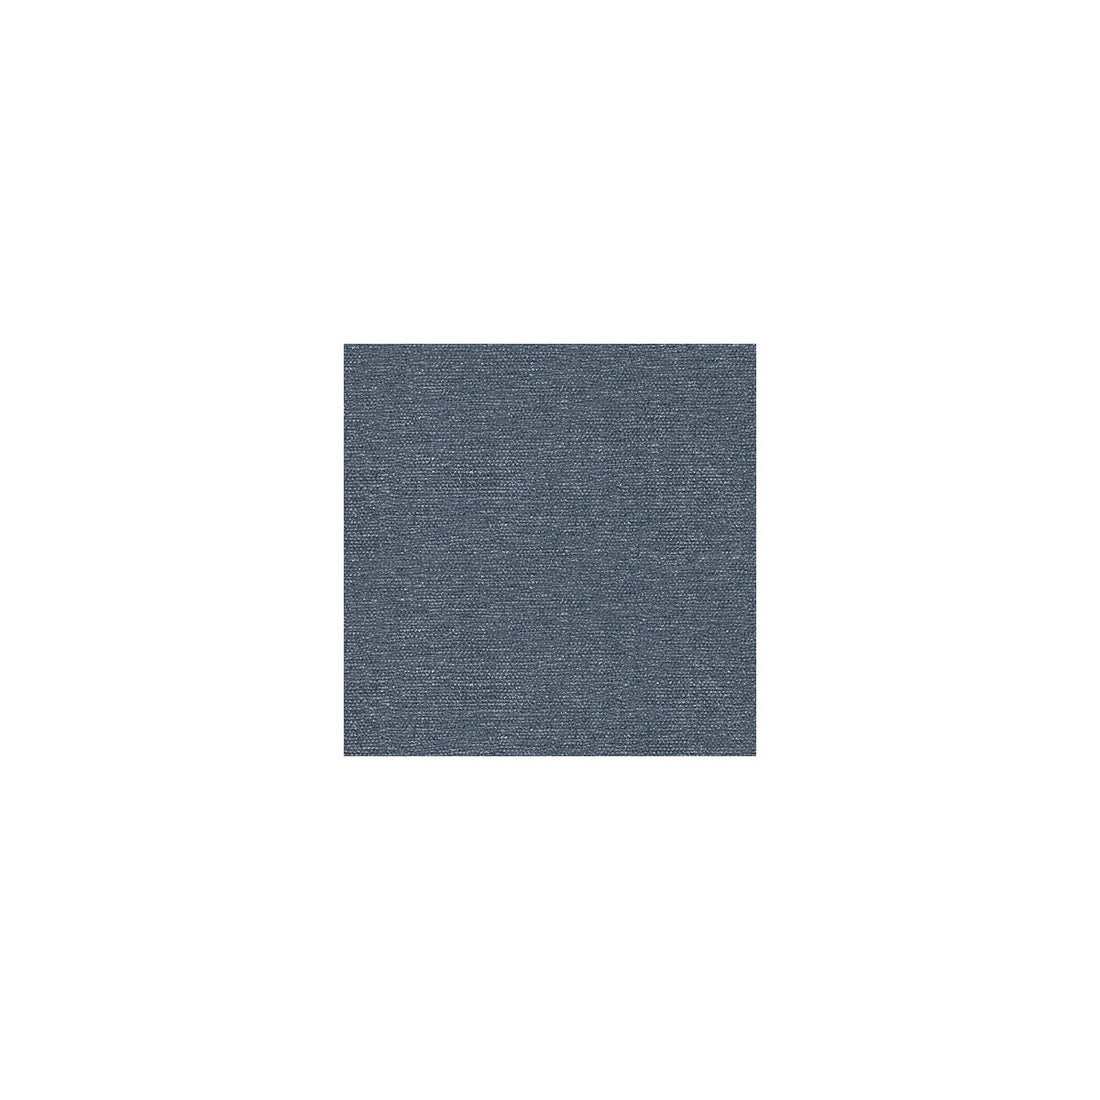 Kravet Smart fabric in 26837-52 color - pattern 26837.52.0 - by Kravet Smart